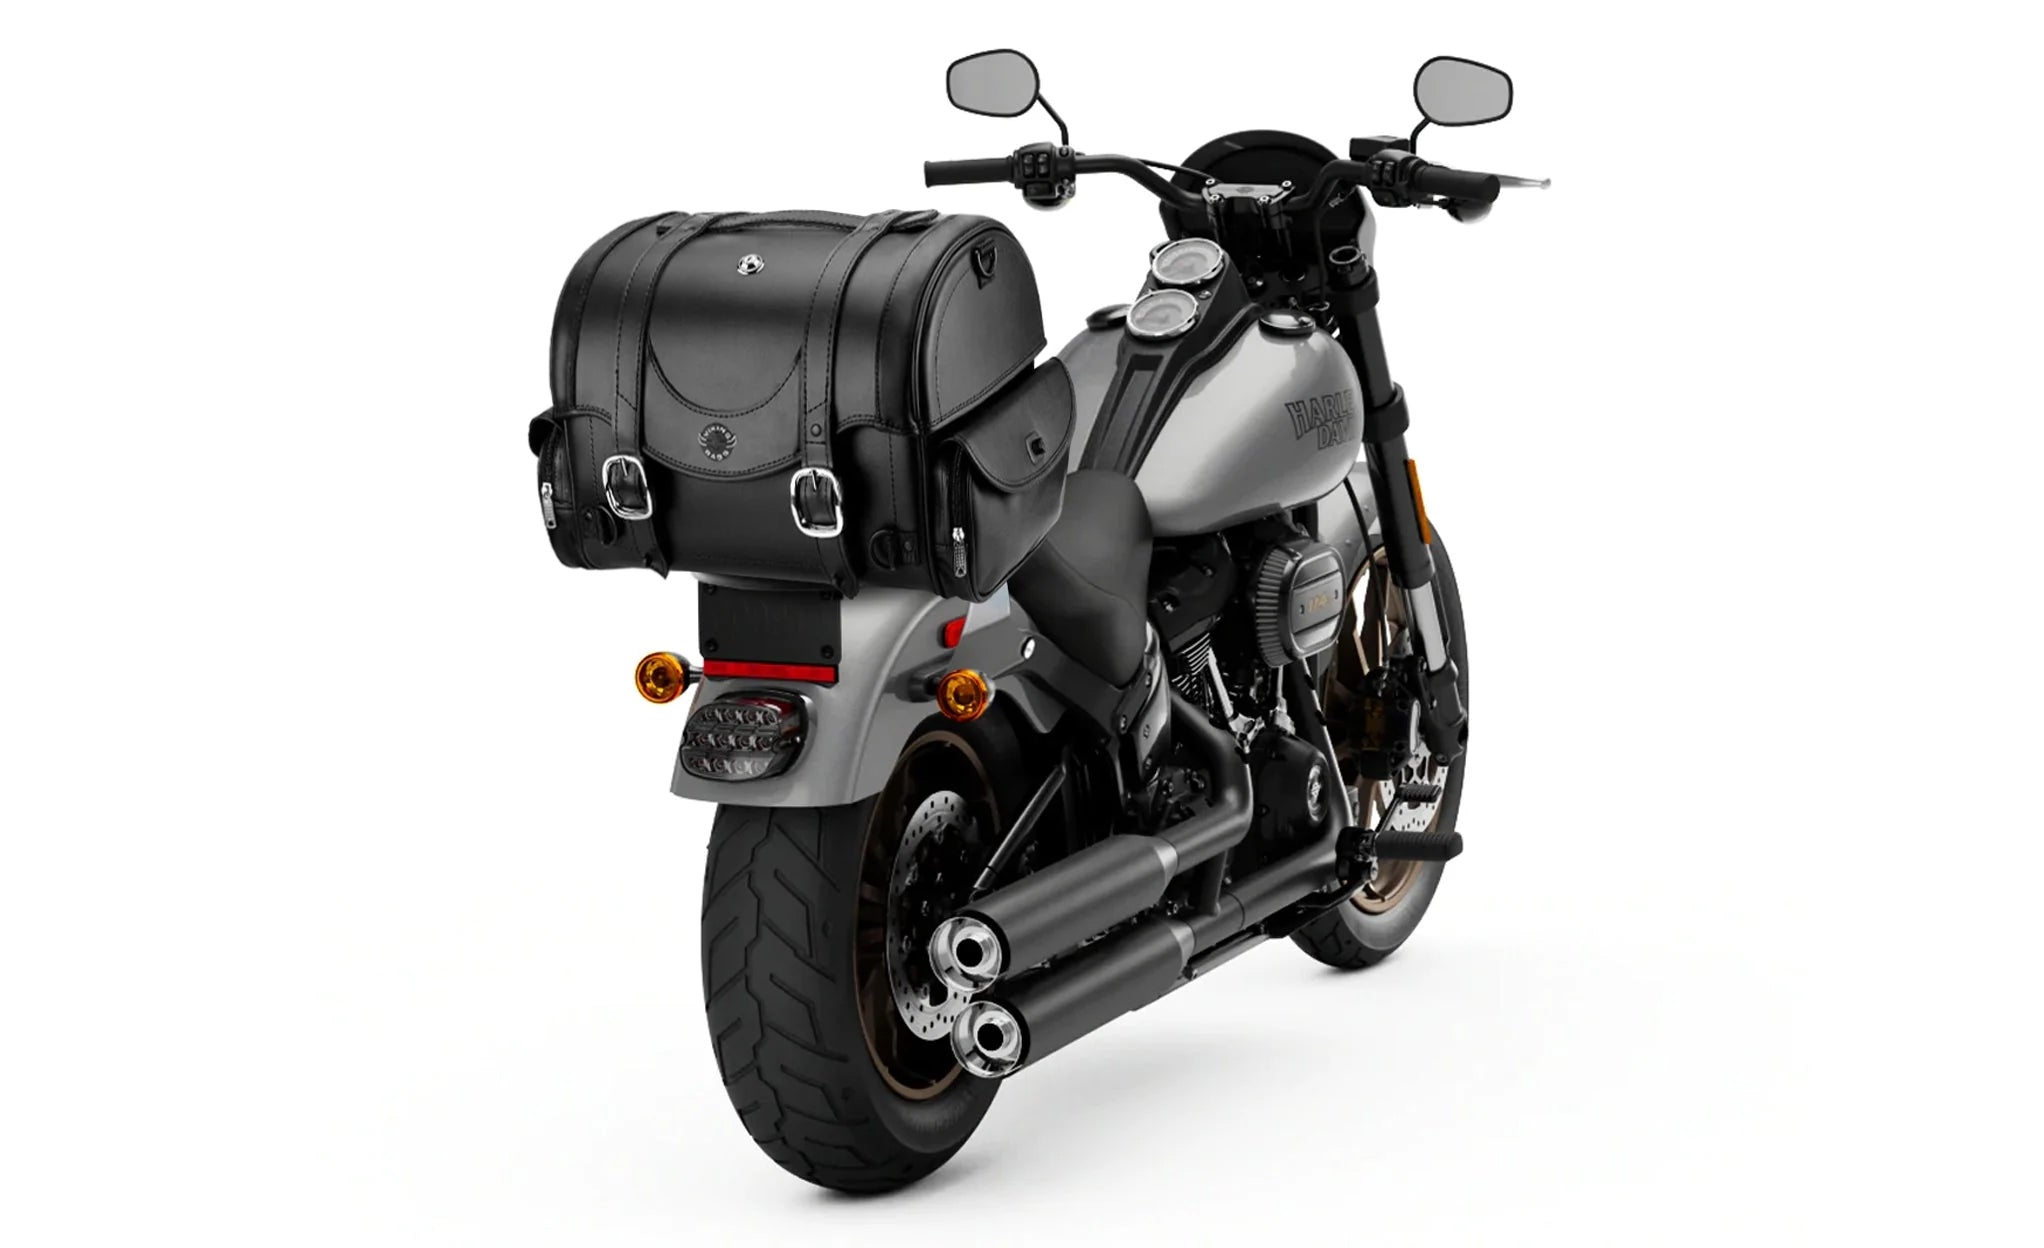 21L - Century Medium Suzuki Leather Motorcycle Trunk Bag on Bike Photo @expand